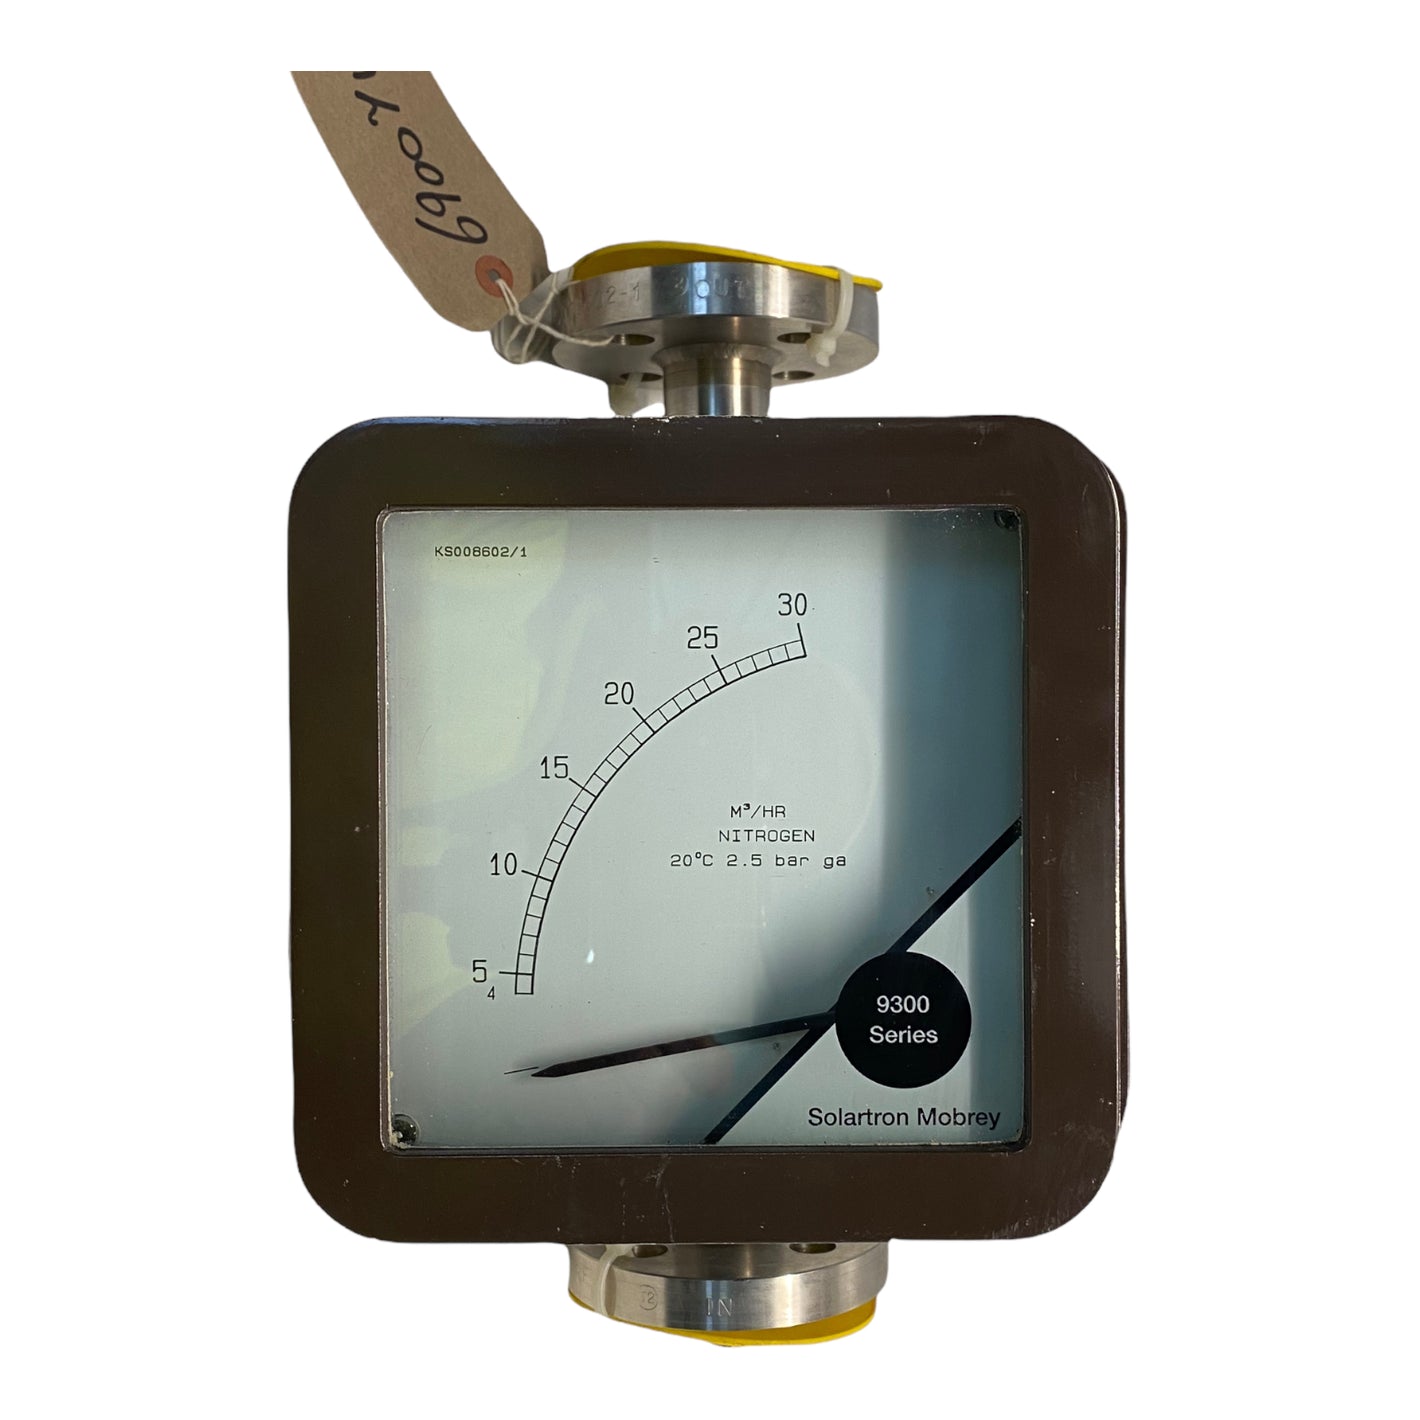 Solartron Mobrey Flowmeter KS008602/1 9300 Series 2.5bar 